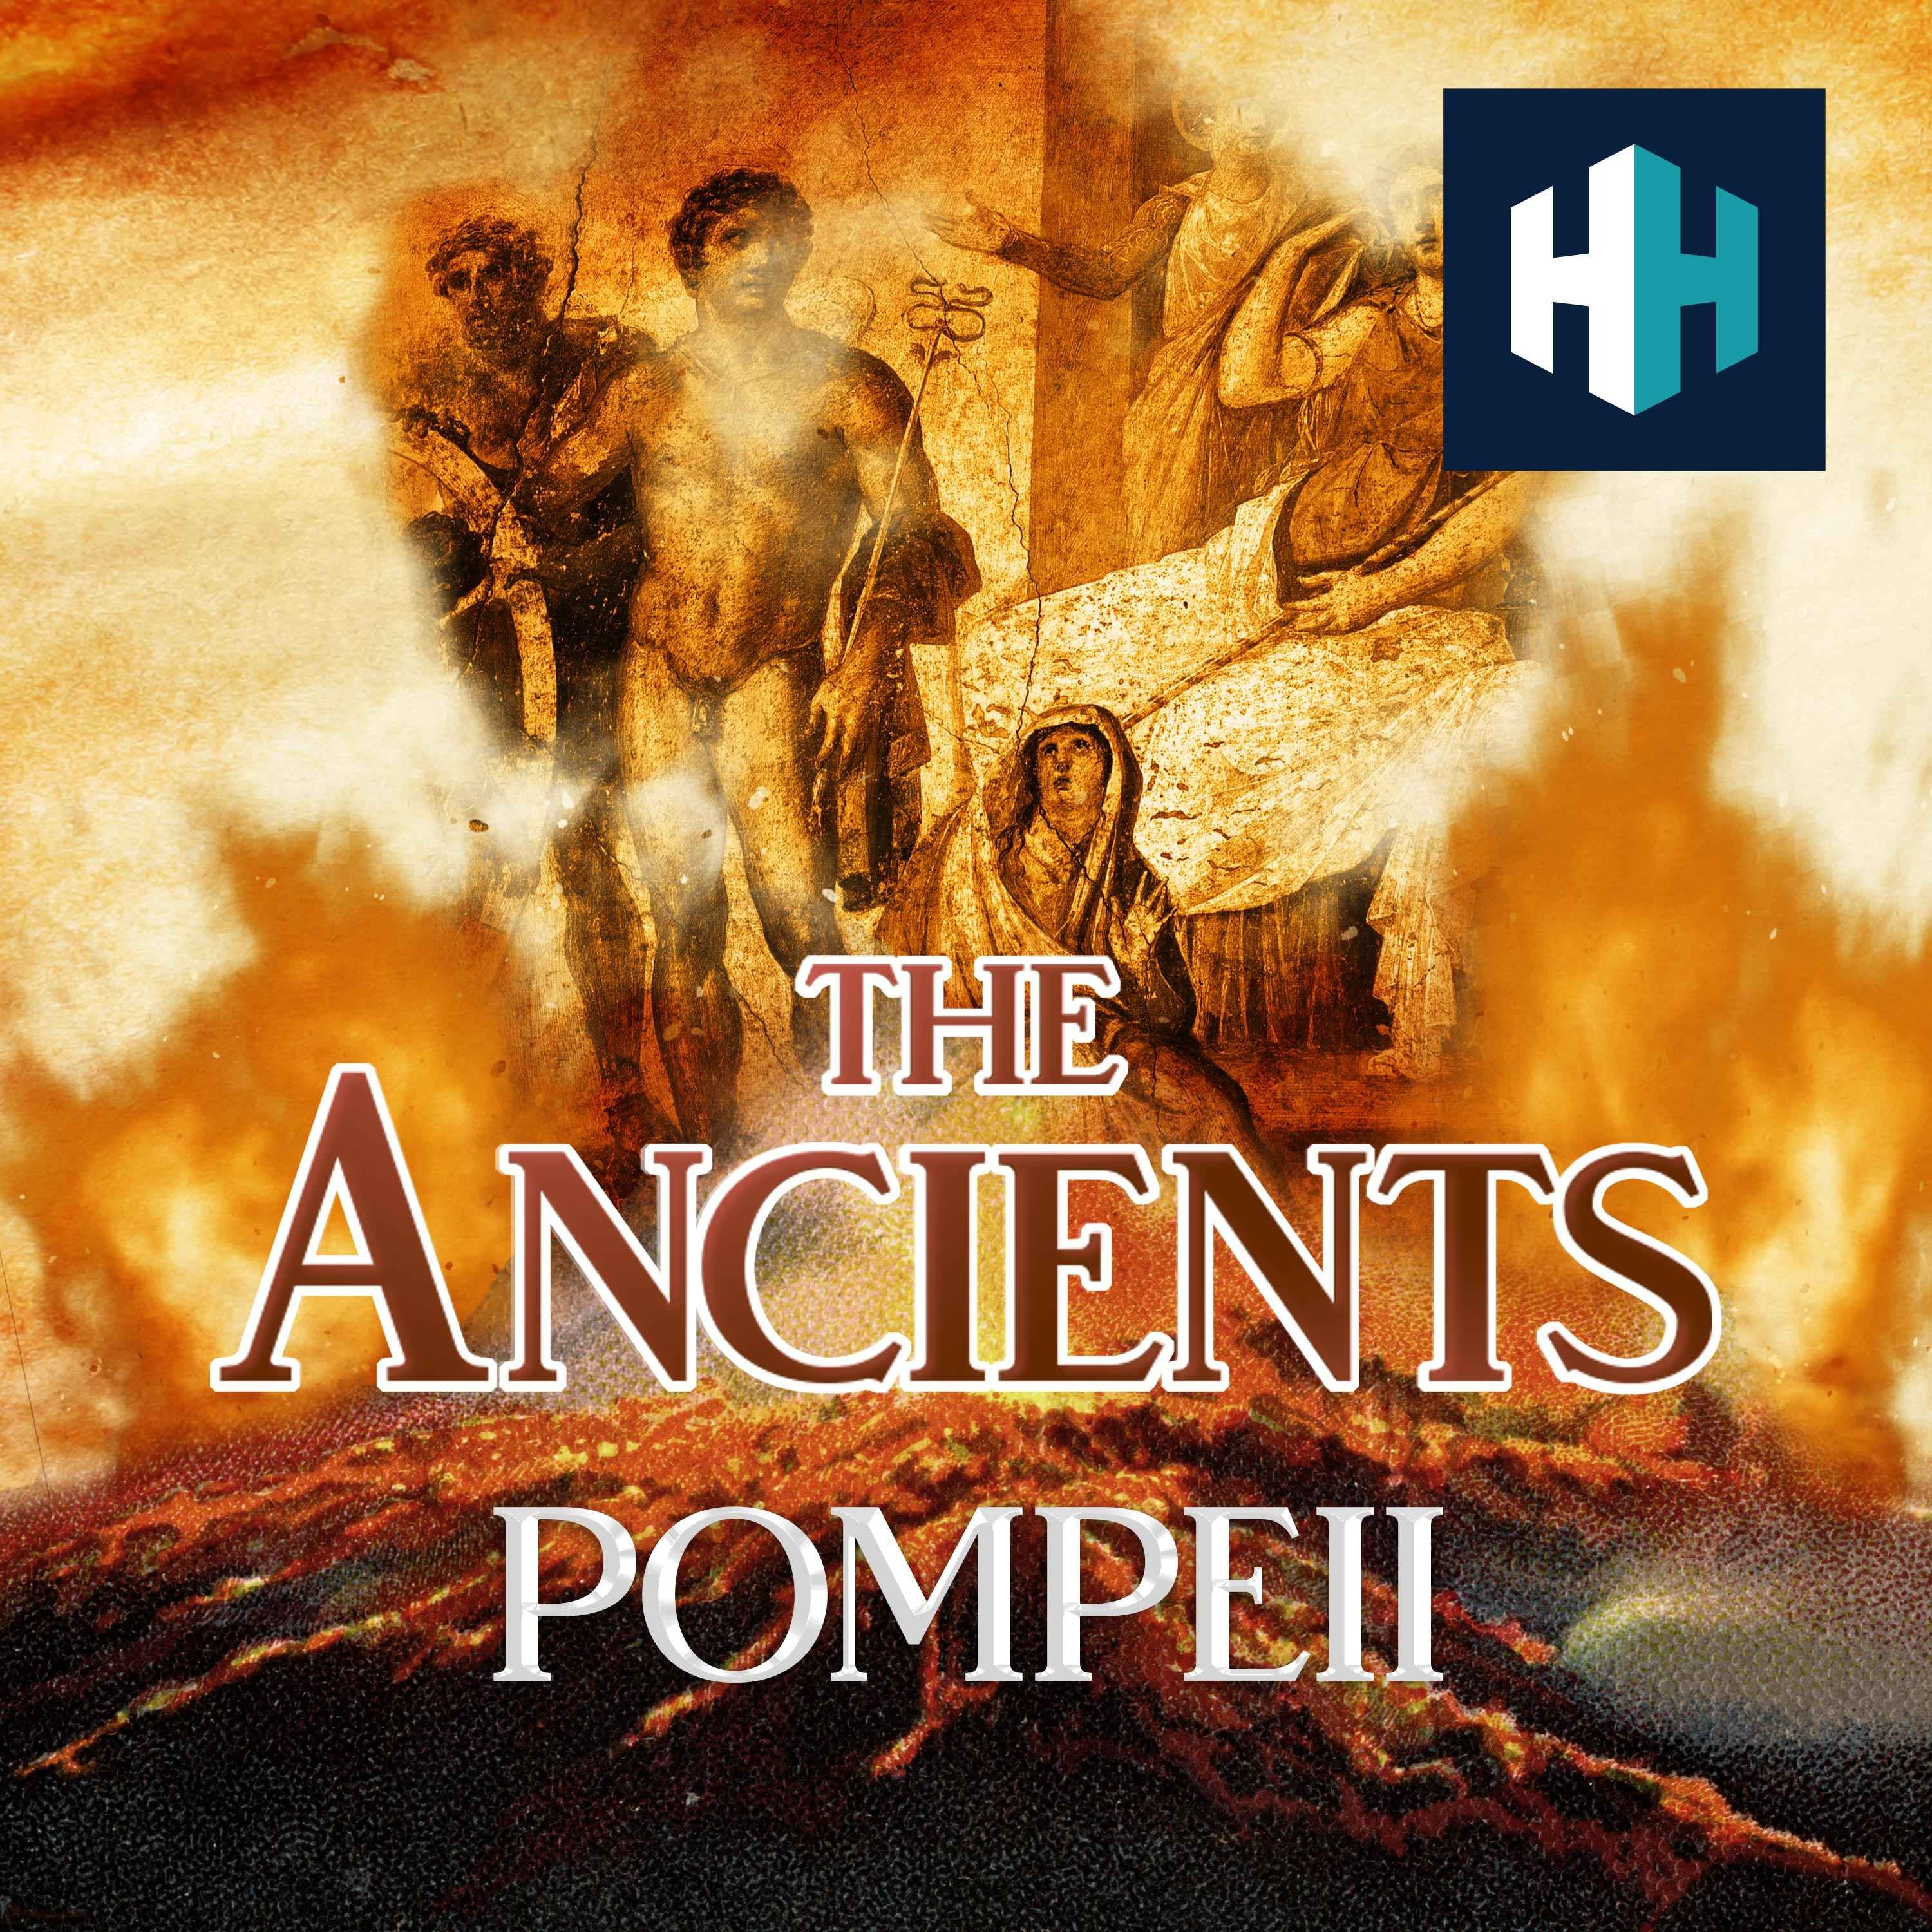 Pompeii: Life Before the Eruption